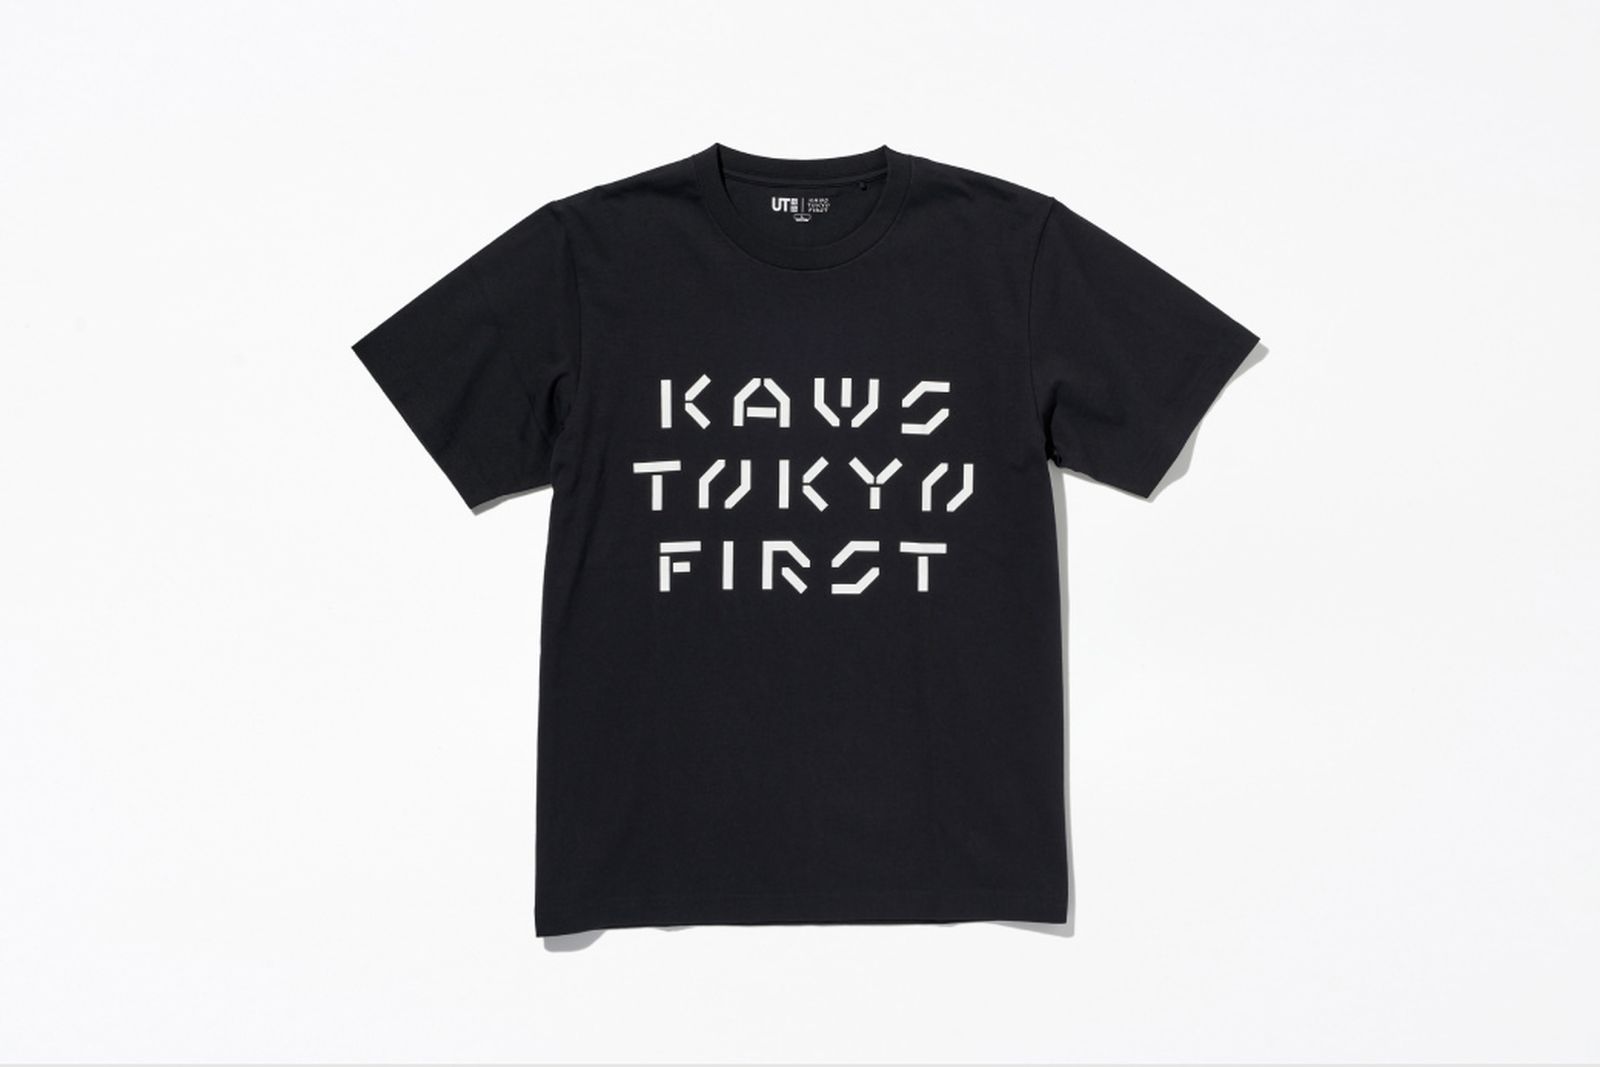 kaws tokyo first uniqlo ut companion tee shirt buy release date info